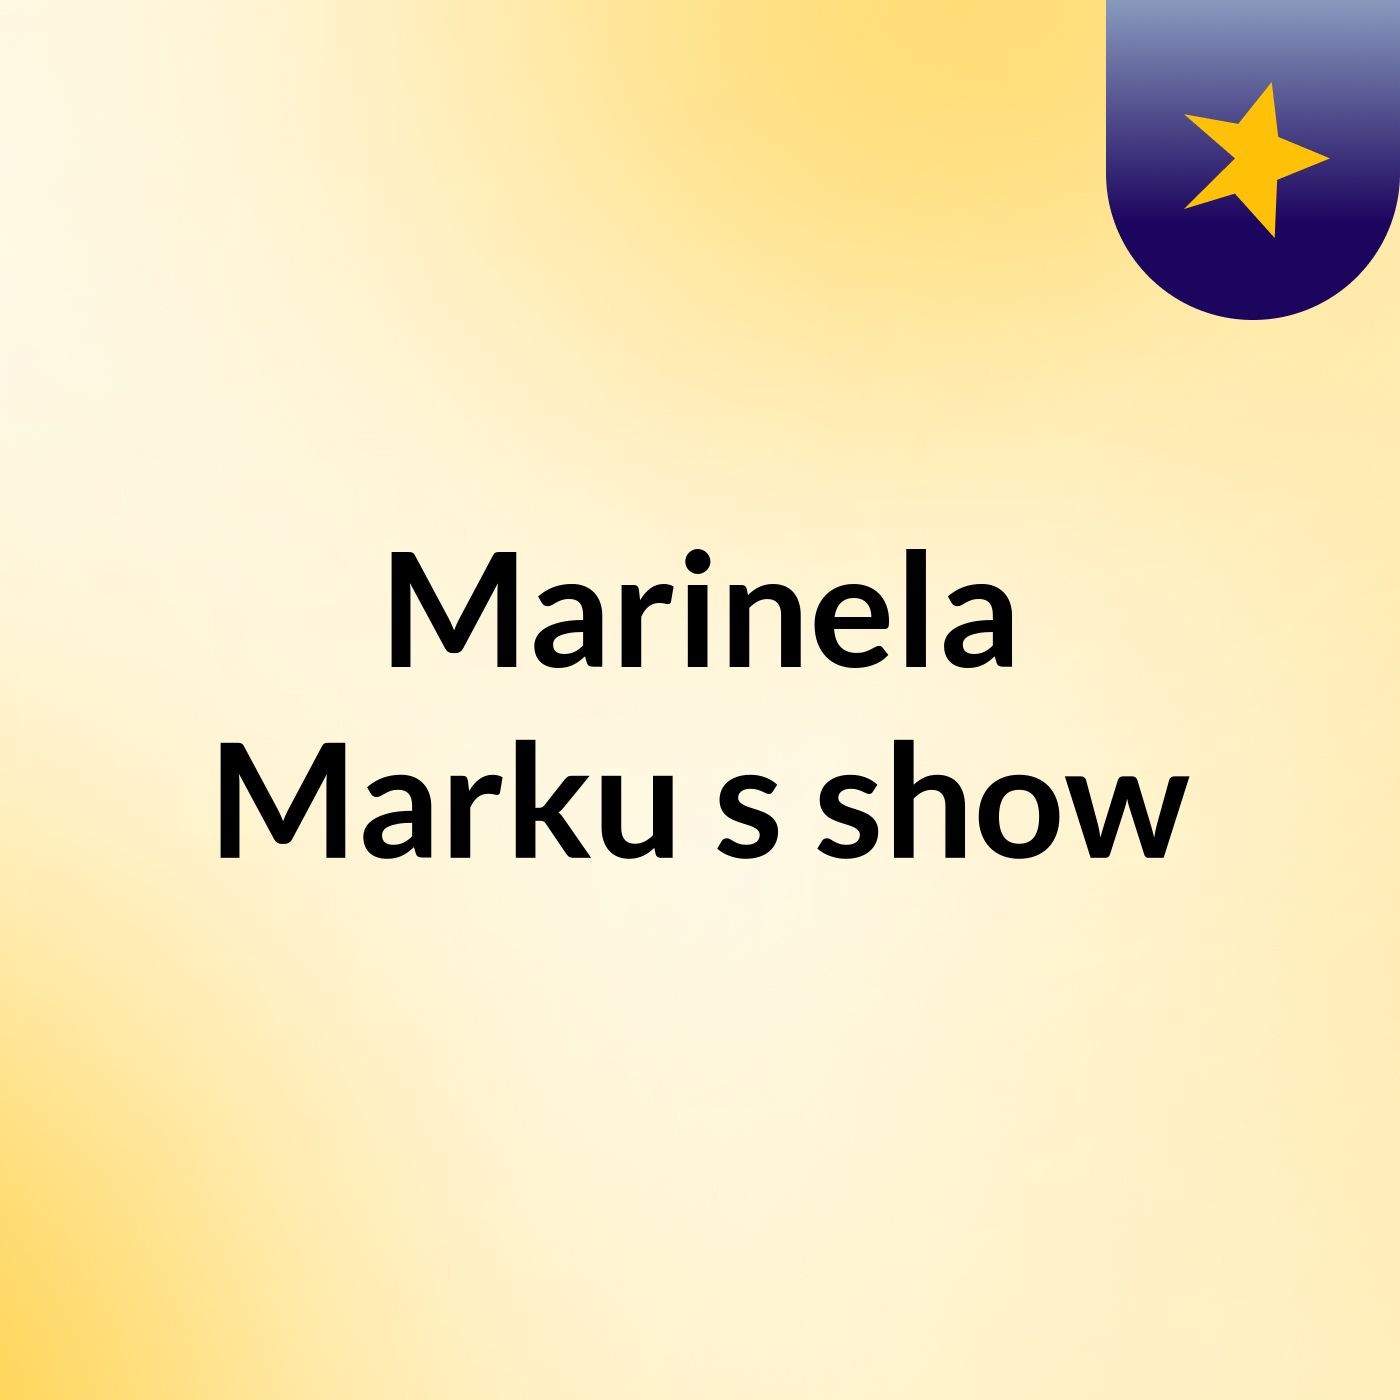 Marinela Marku's show